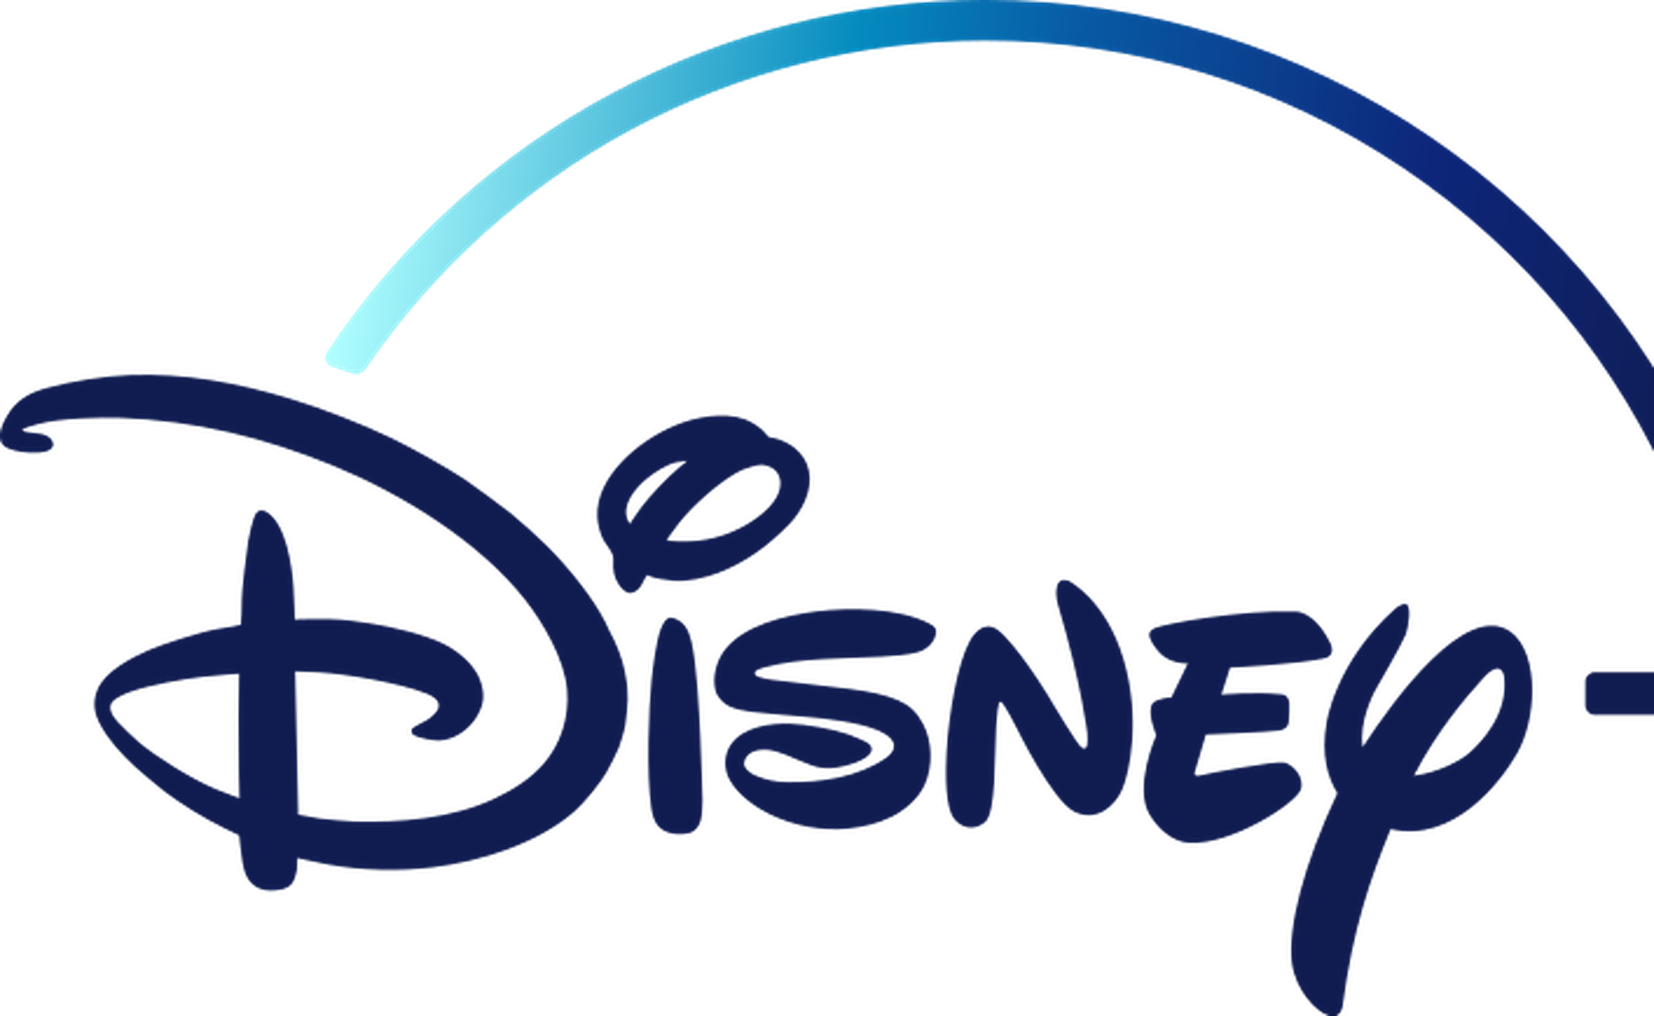 New disney plus logo. Дисней плюс. Walt Disney надпись. Дисней плюс логотип. Уолт Дисней логотип на прозрачном фоне.